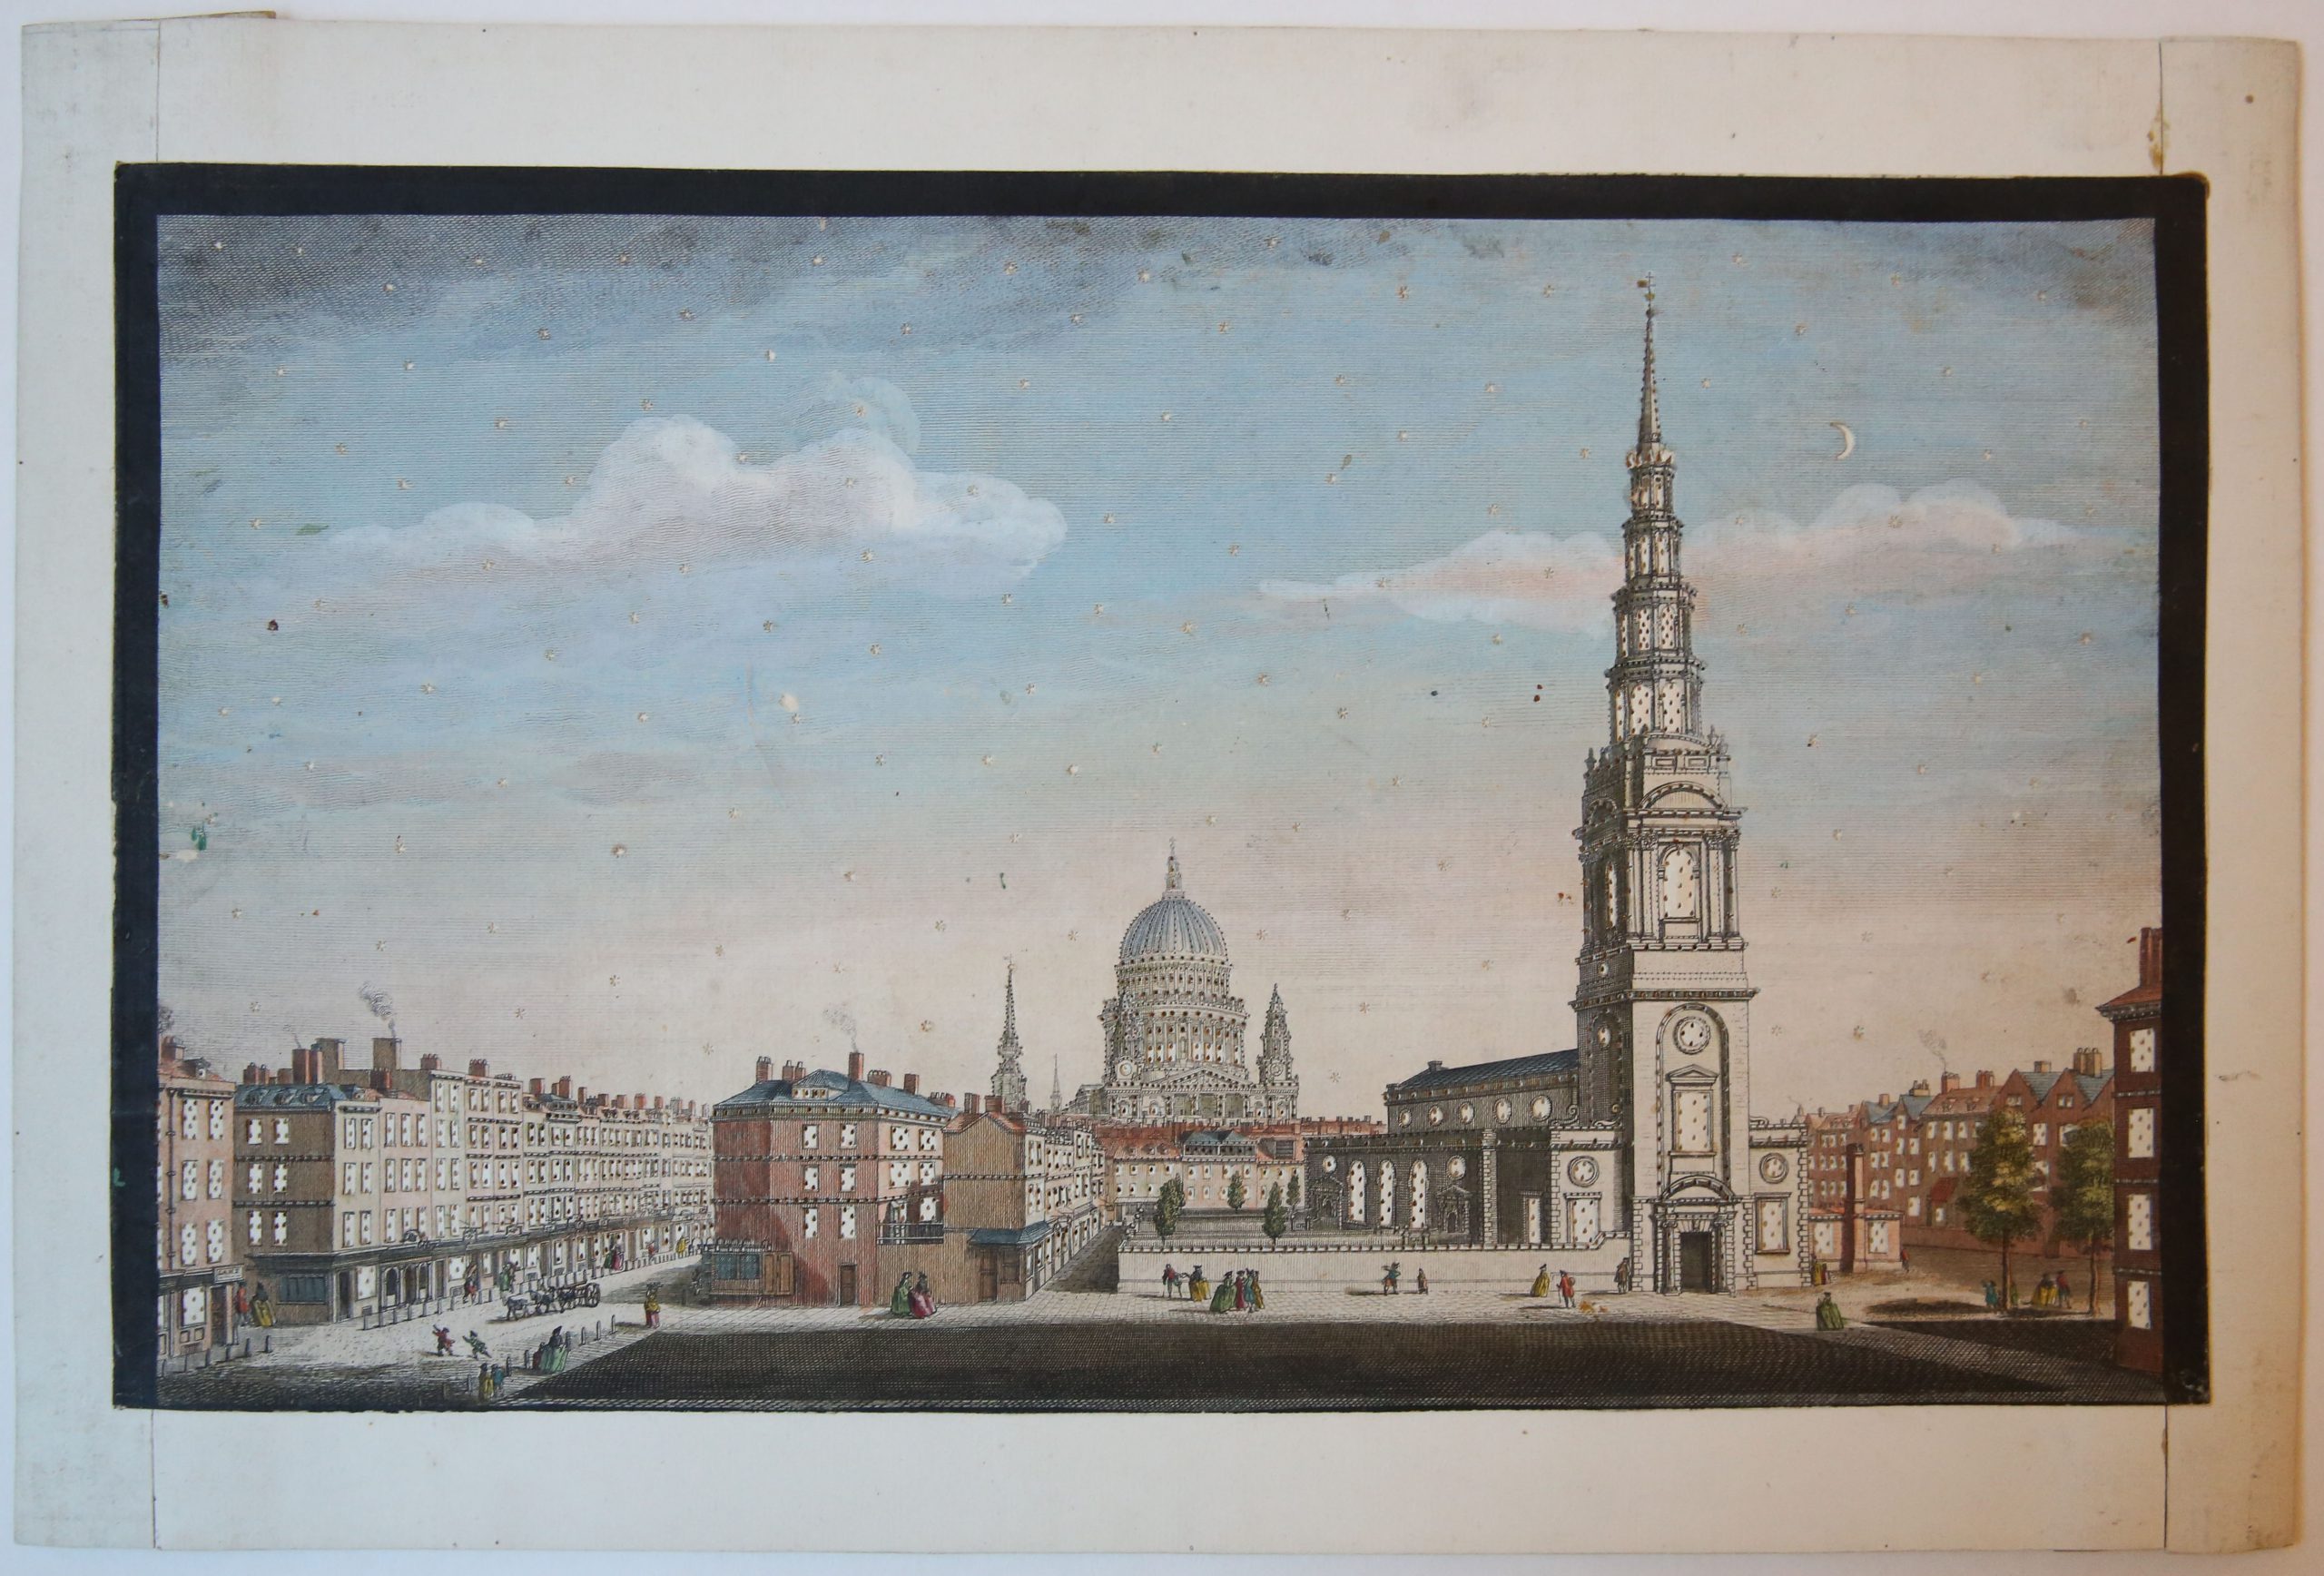 Optica print/Opticaprent: [London] St. Paul in London, ca 1750-1800, 1 p.